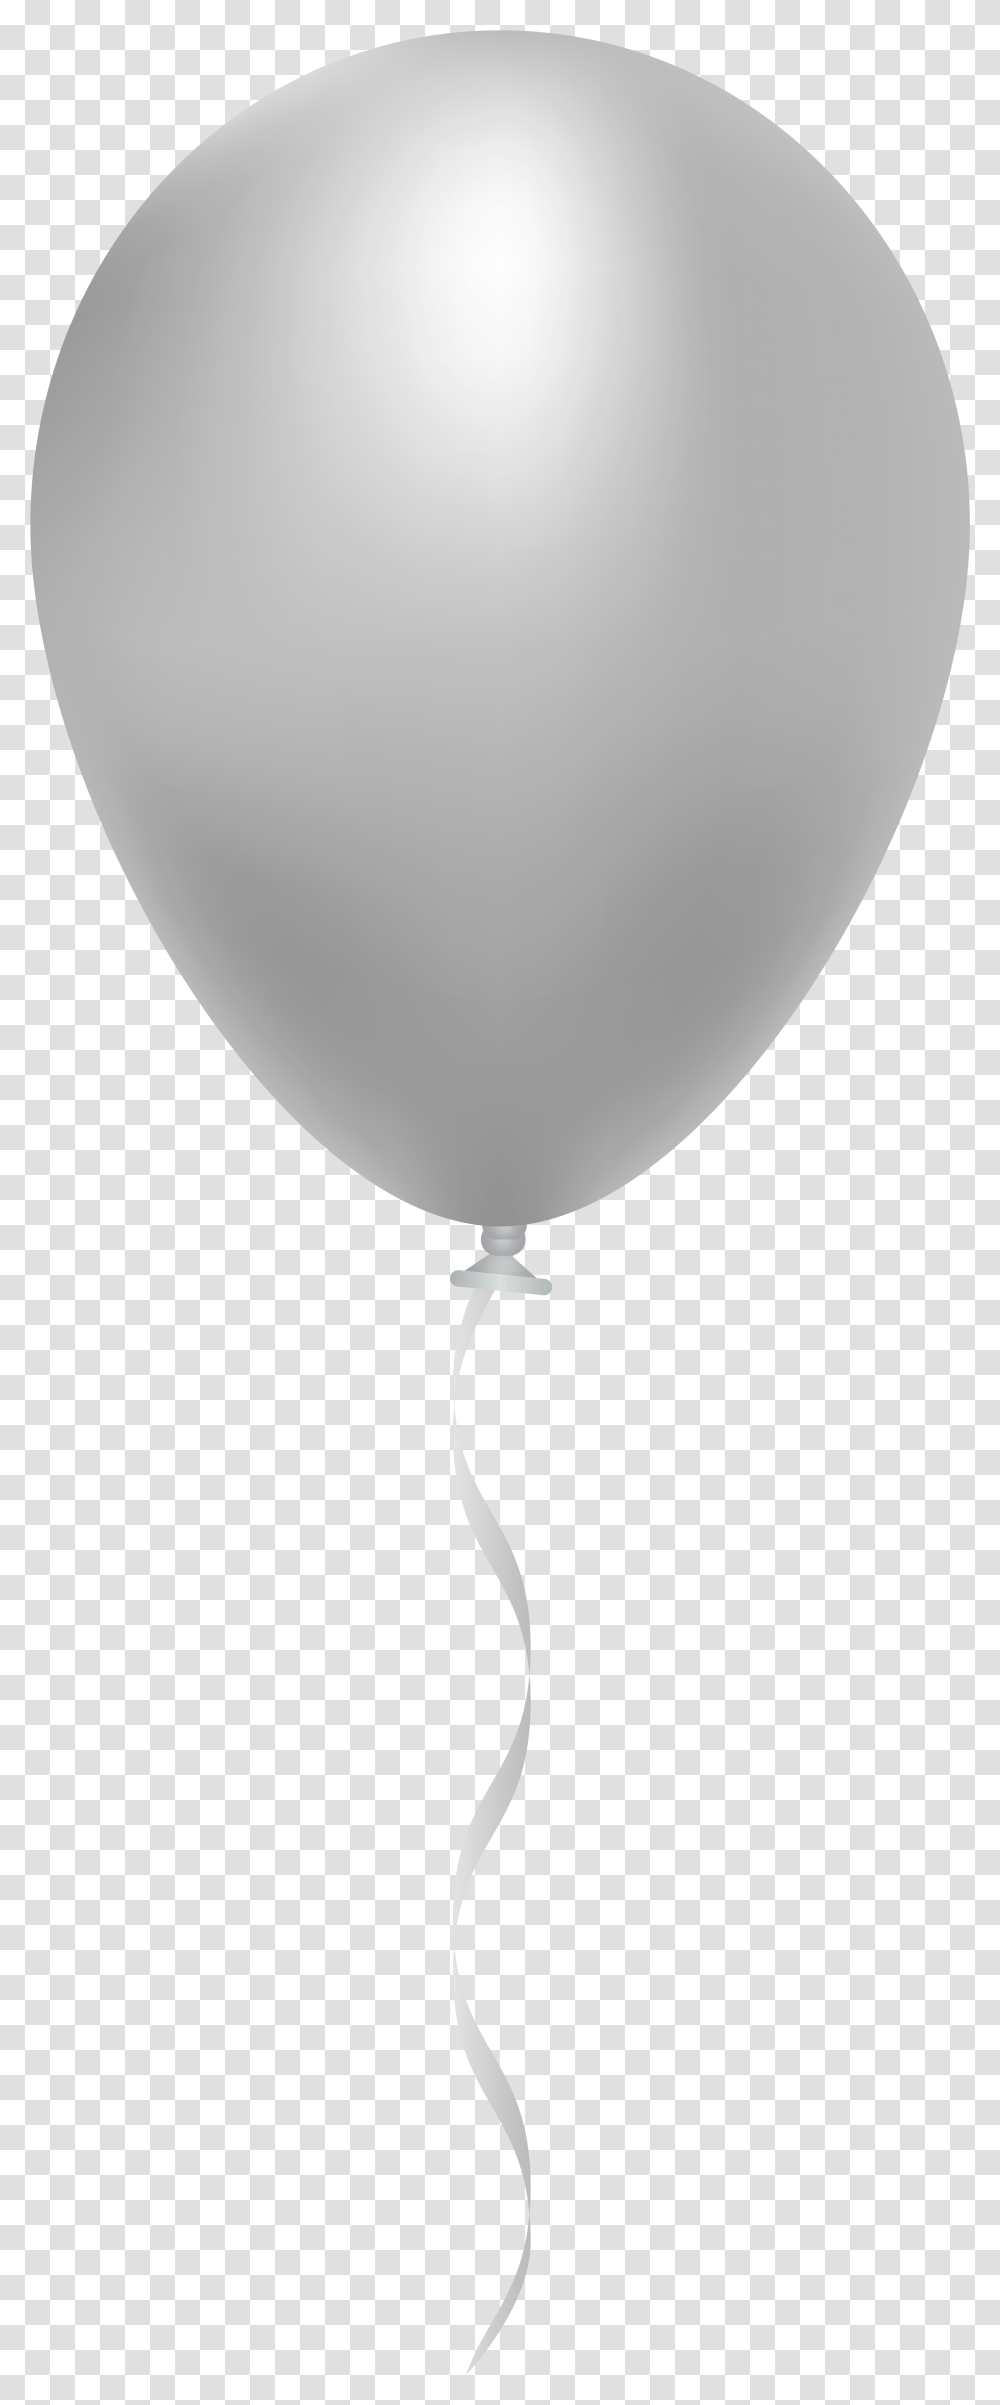 White Balloon Balloon Transparent Png